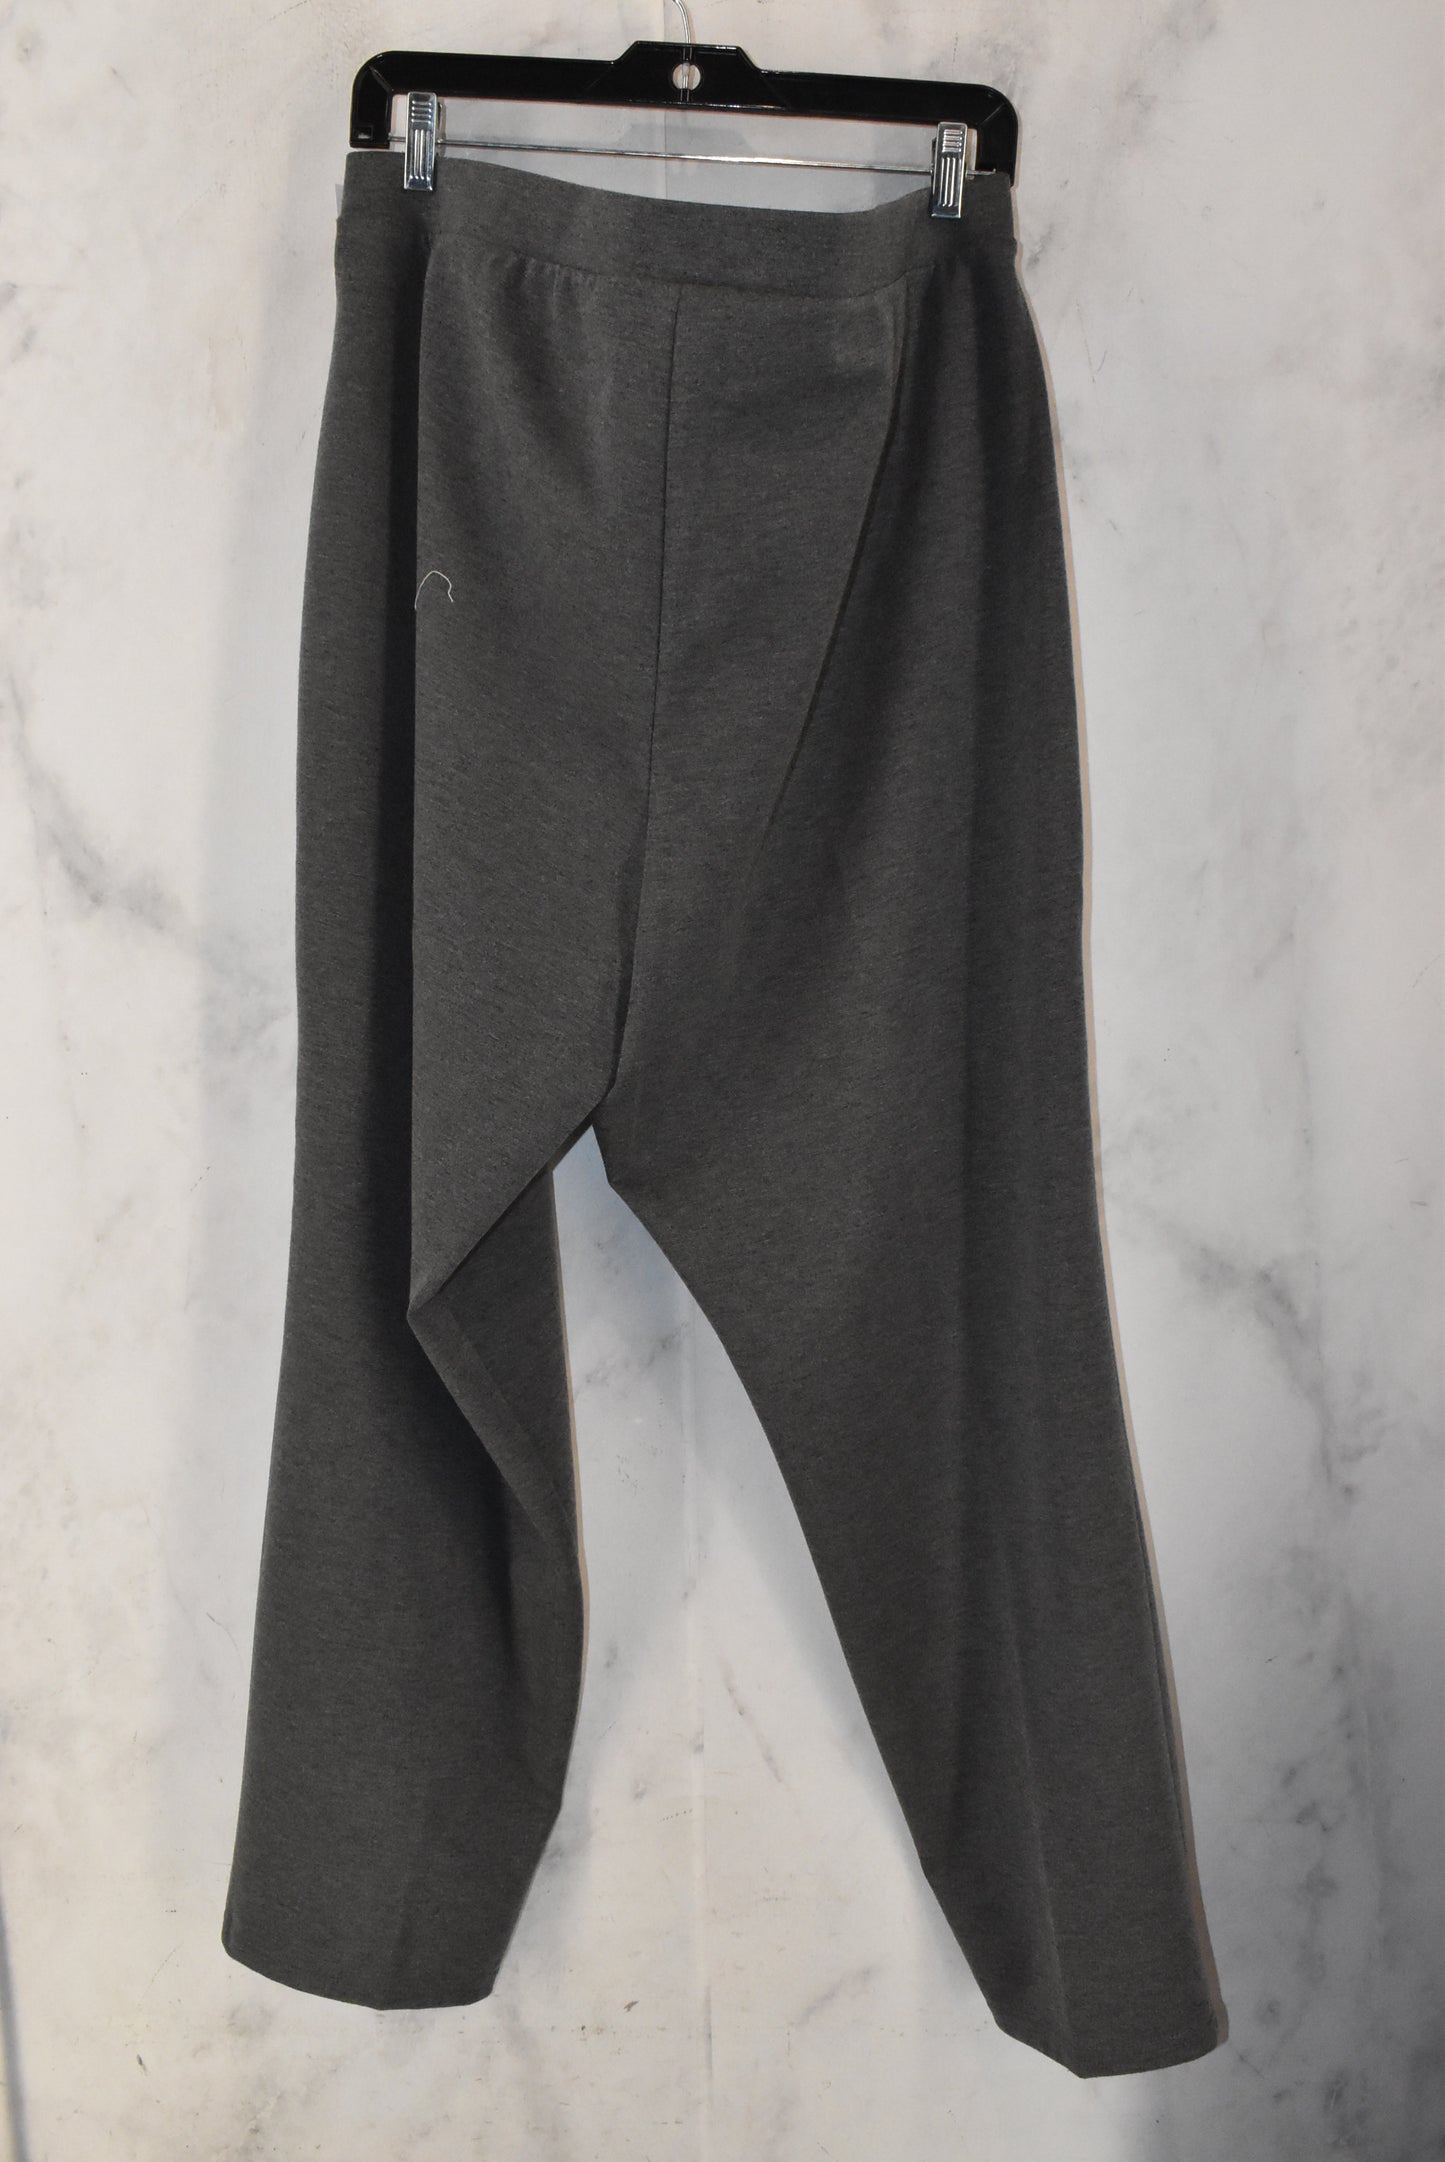 Pants Work/dress By Worthington  Size: 1x